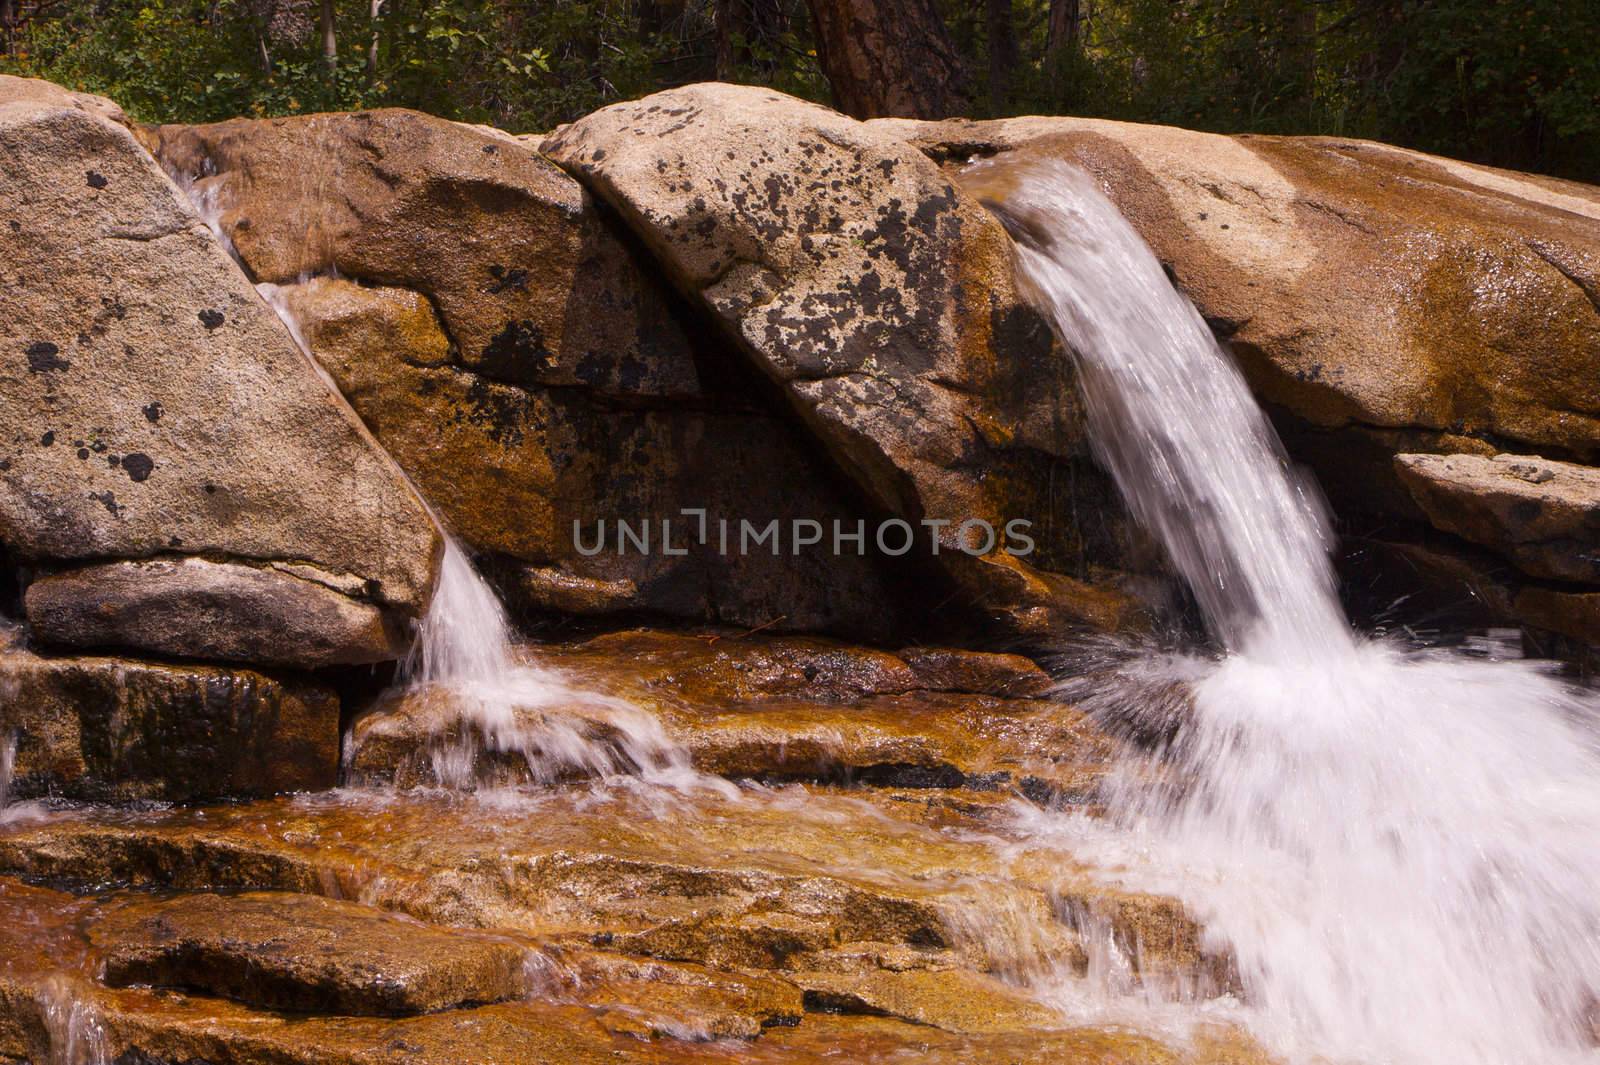 Small Sierra Waterfalls to pond by bobkeenan